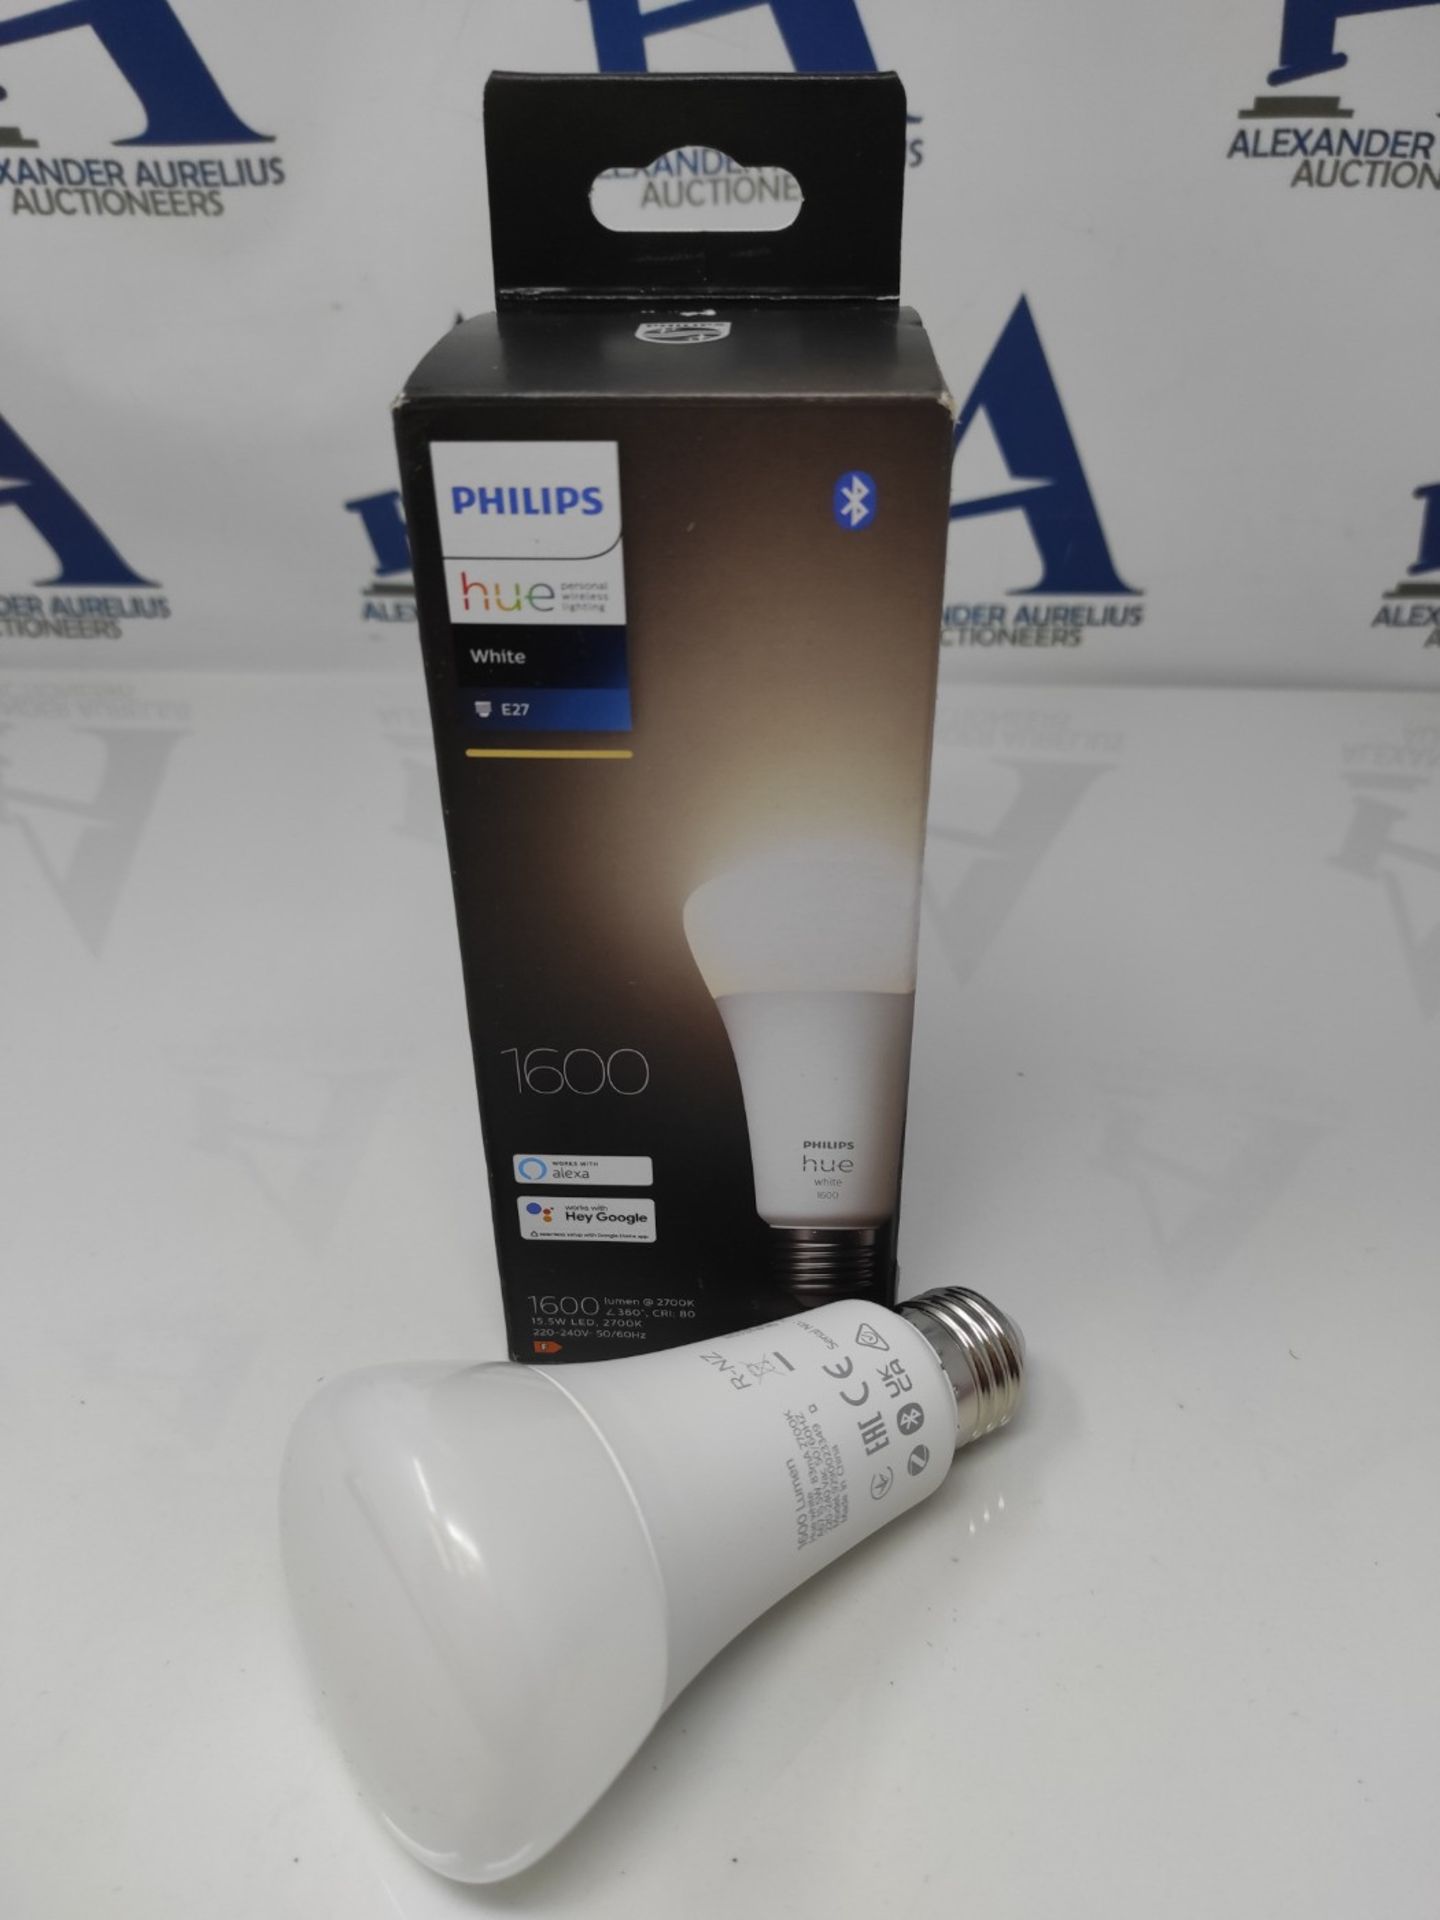 Philips Hue NEW White Smart Light Bulb 100W - 1600 Lumen [E27 Edison Screw] With Bluet - Image 2 of 2